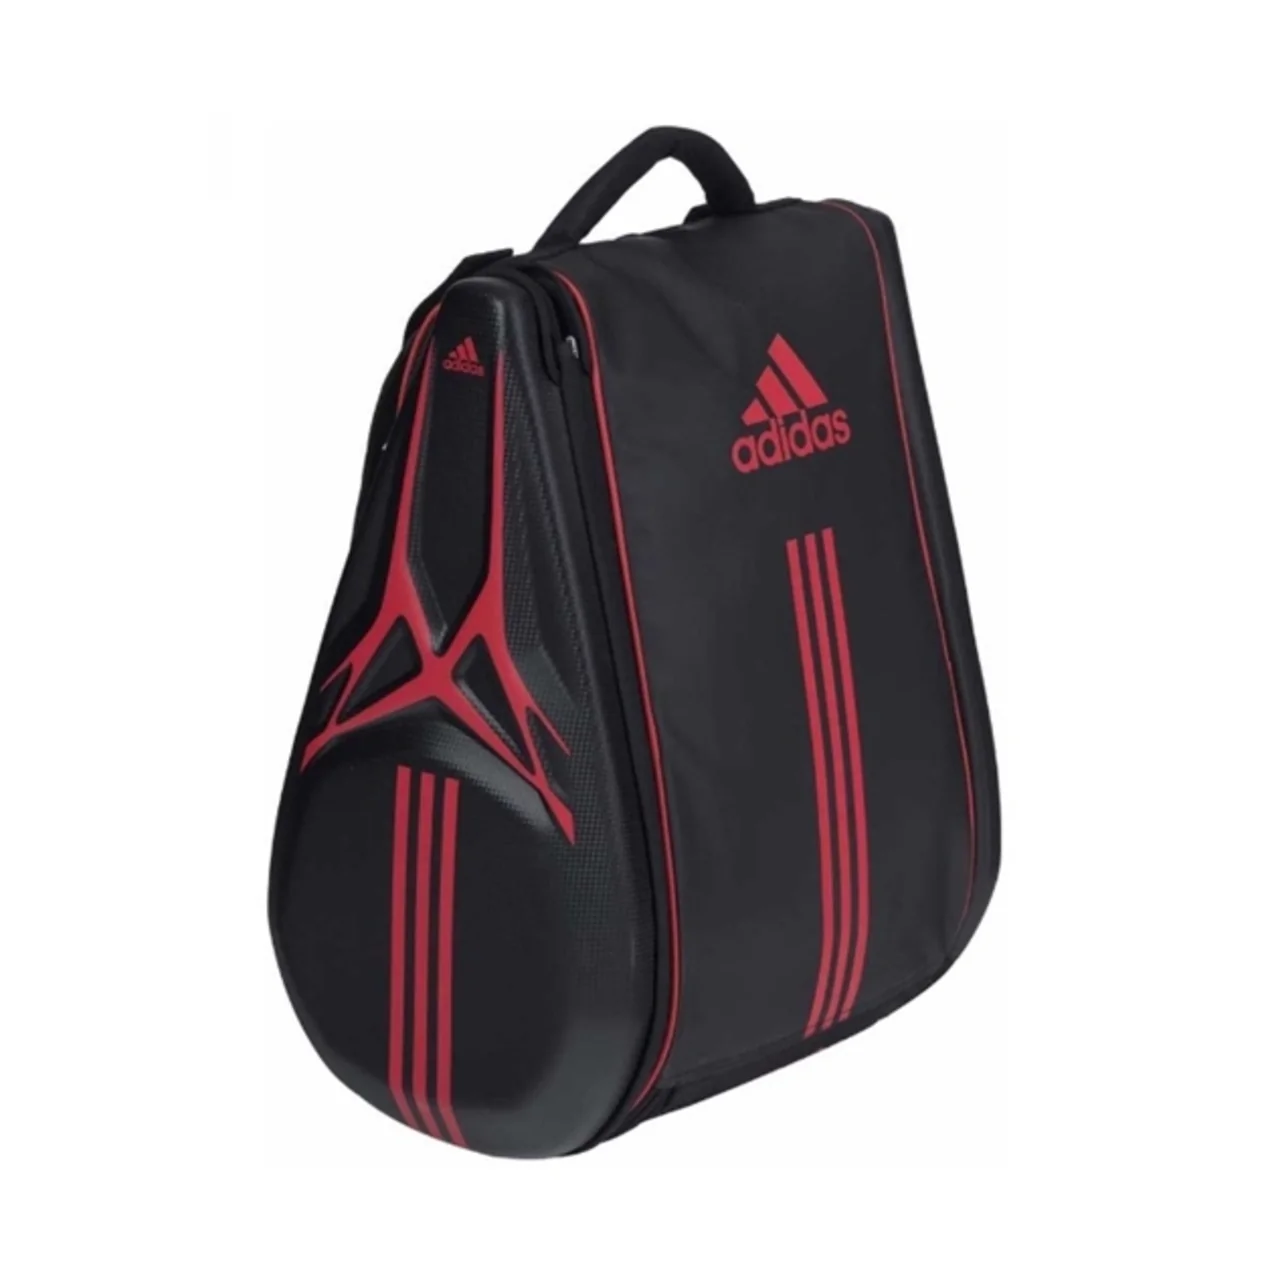 Adidas Adipower Padel Bag Black/Red